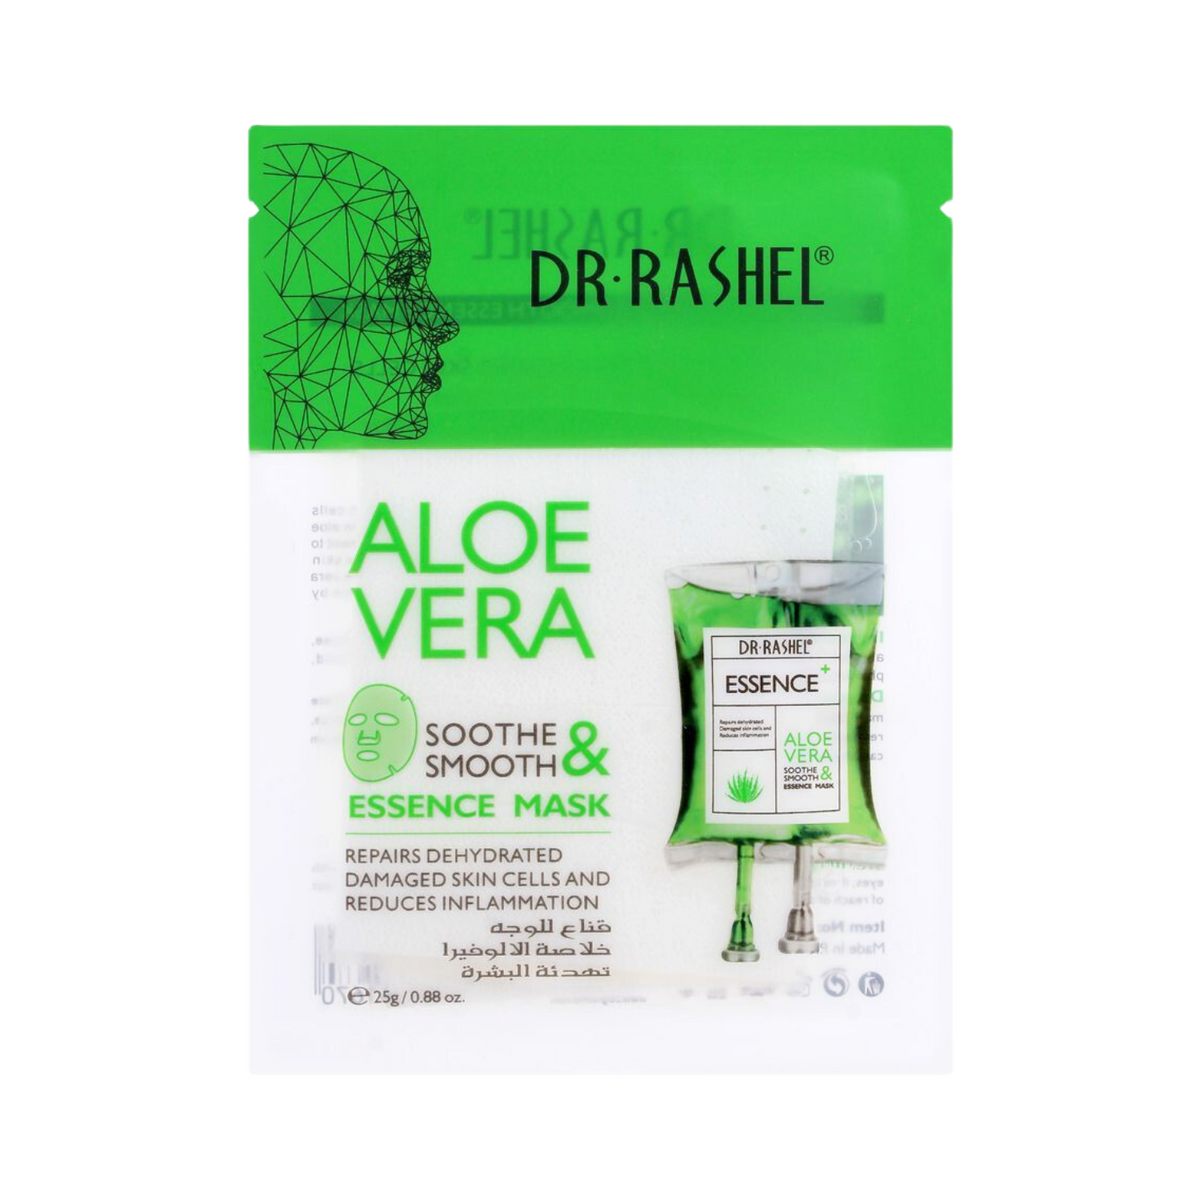 dr-rashel-aloe-vera-soothe-smooth-essence-mask-25g